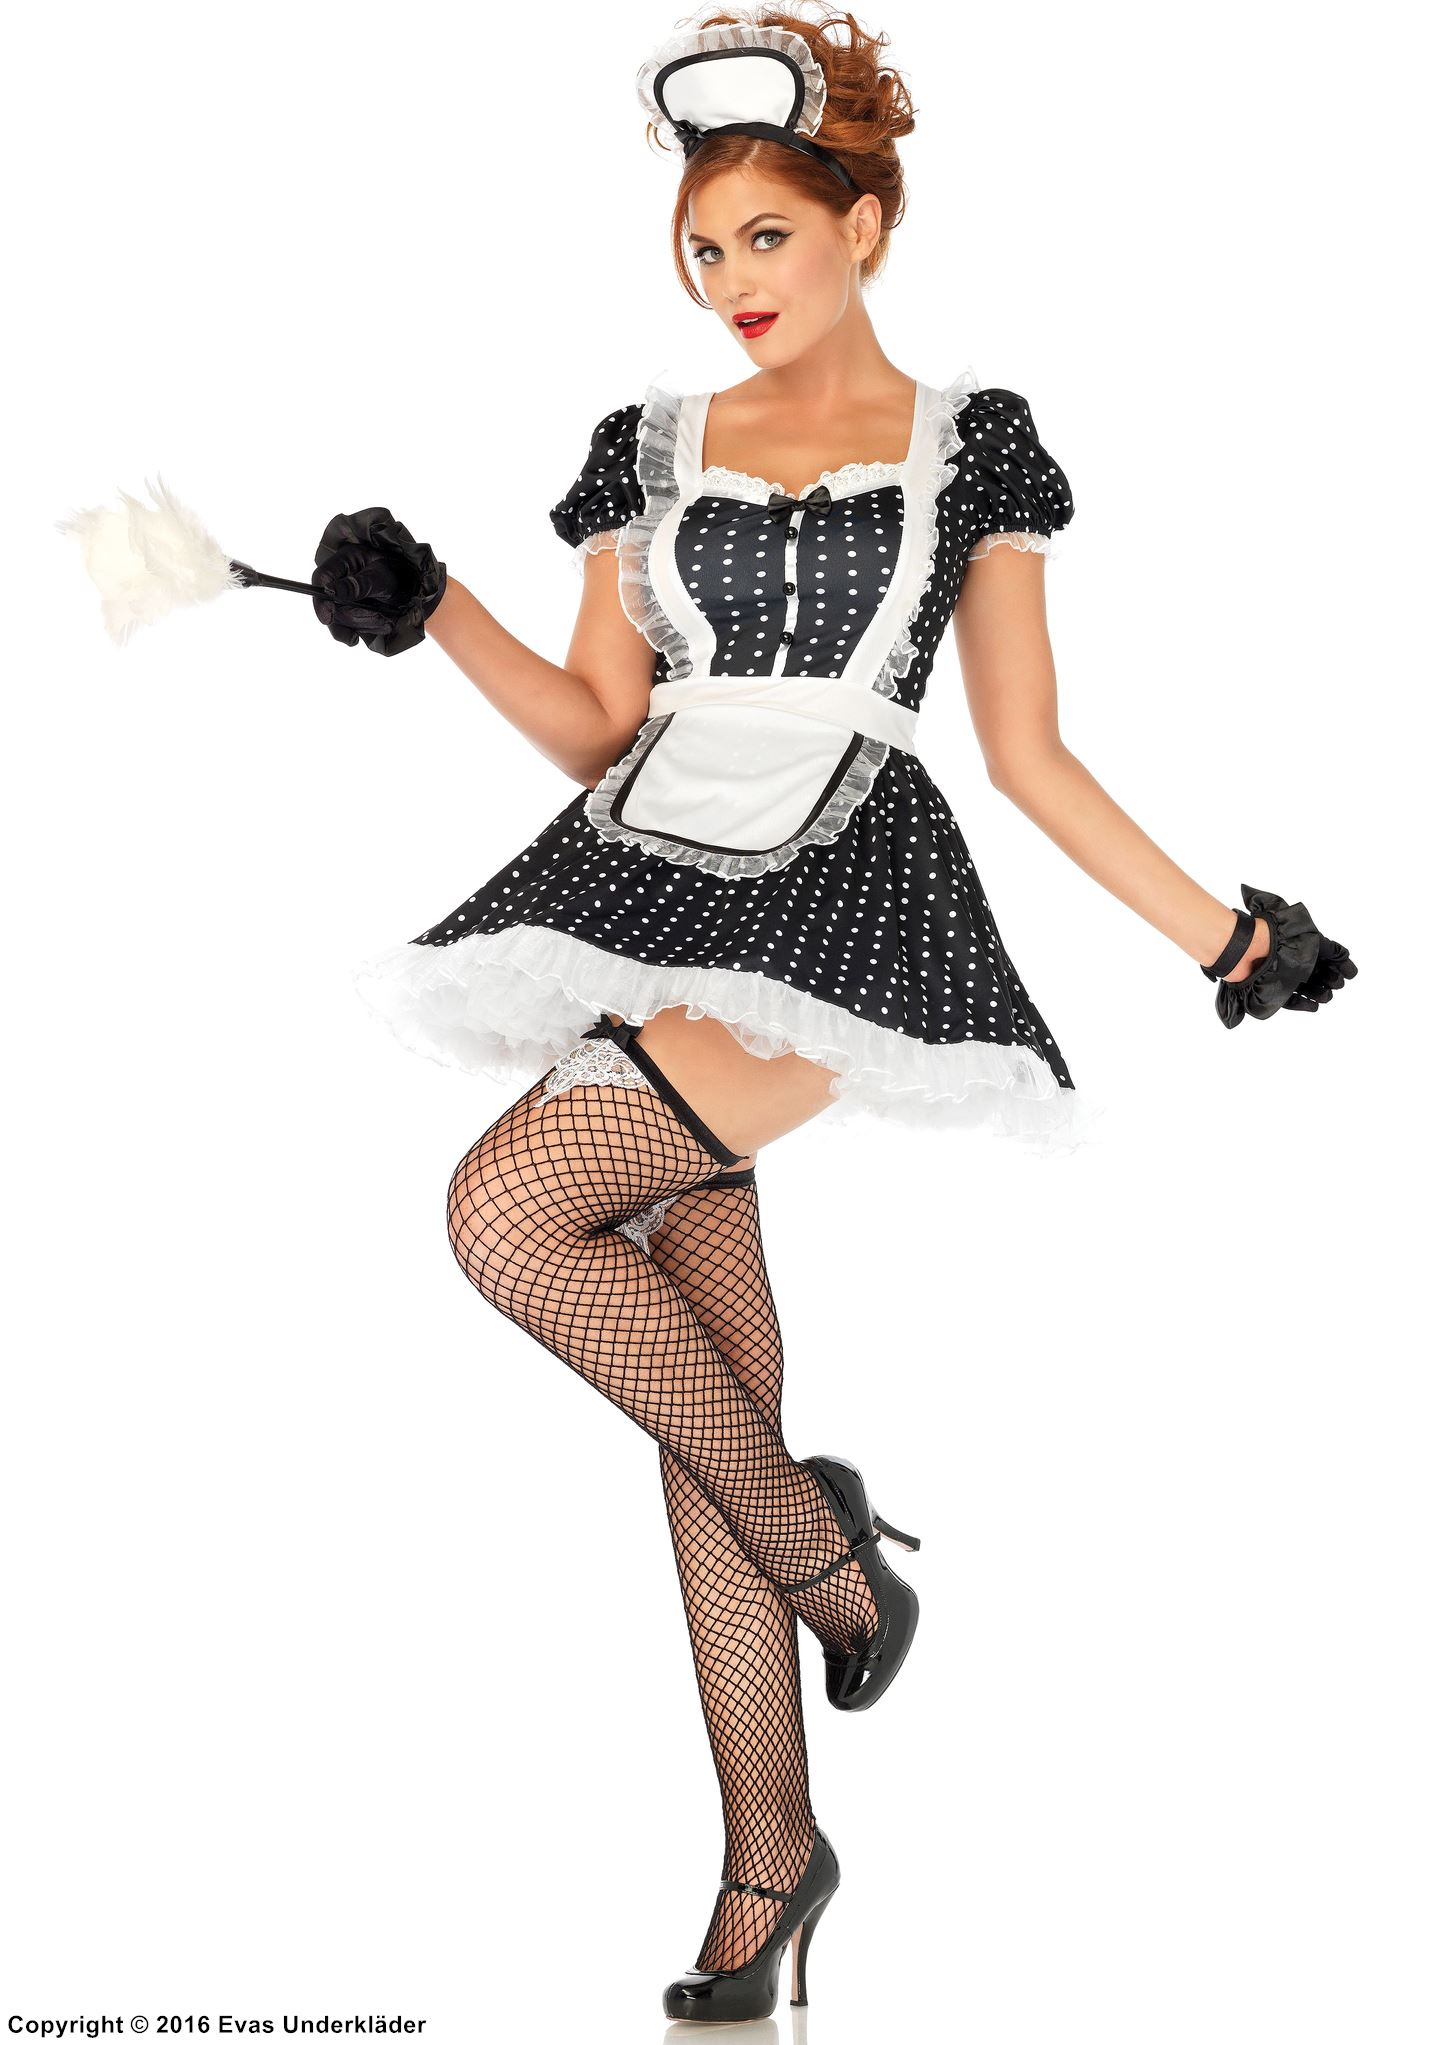 French maid, costume dress, ruffles, puff sleeves, polka dot.